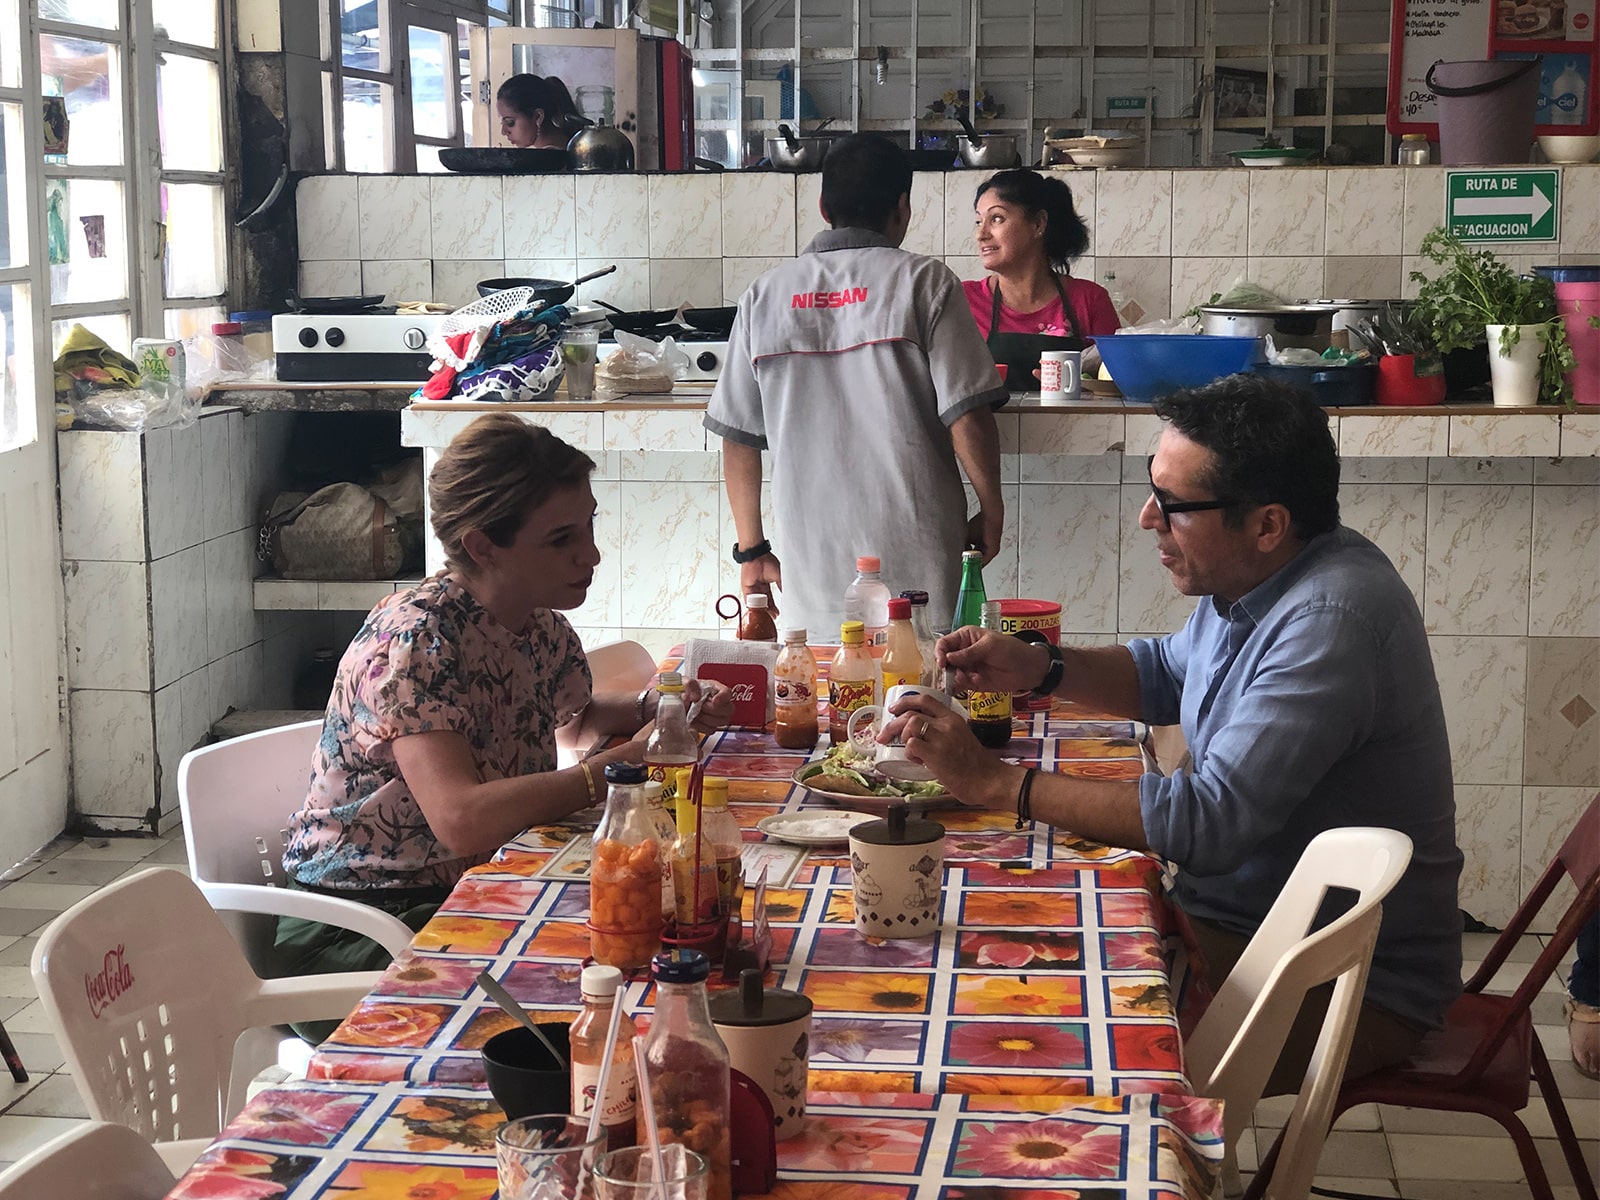 Episode 805: A Taste of Mazatlán